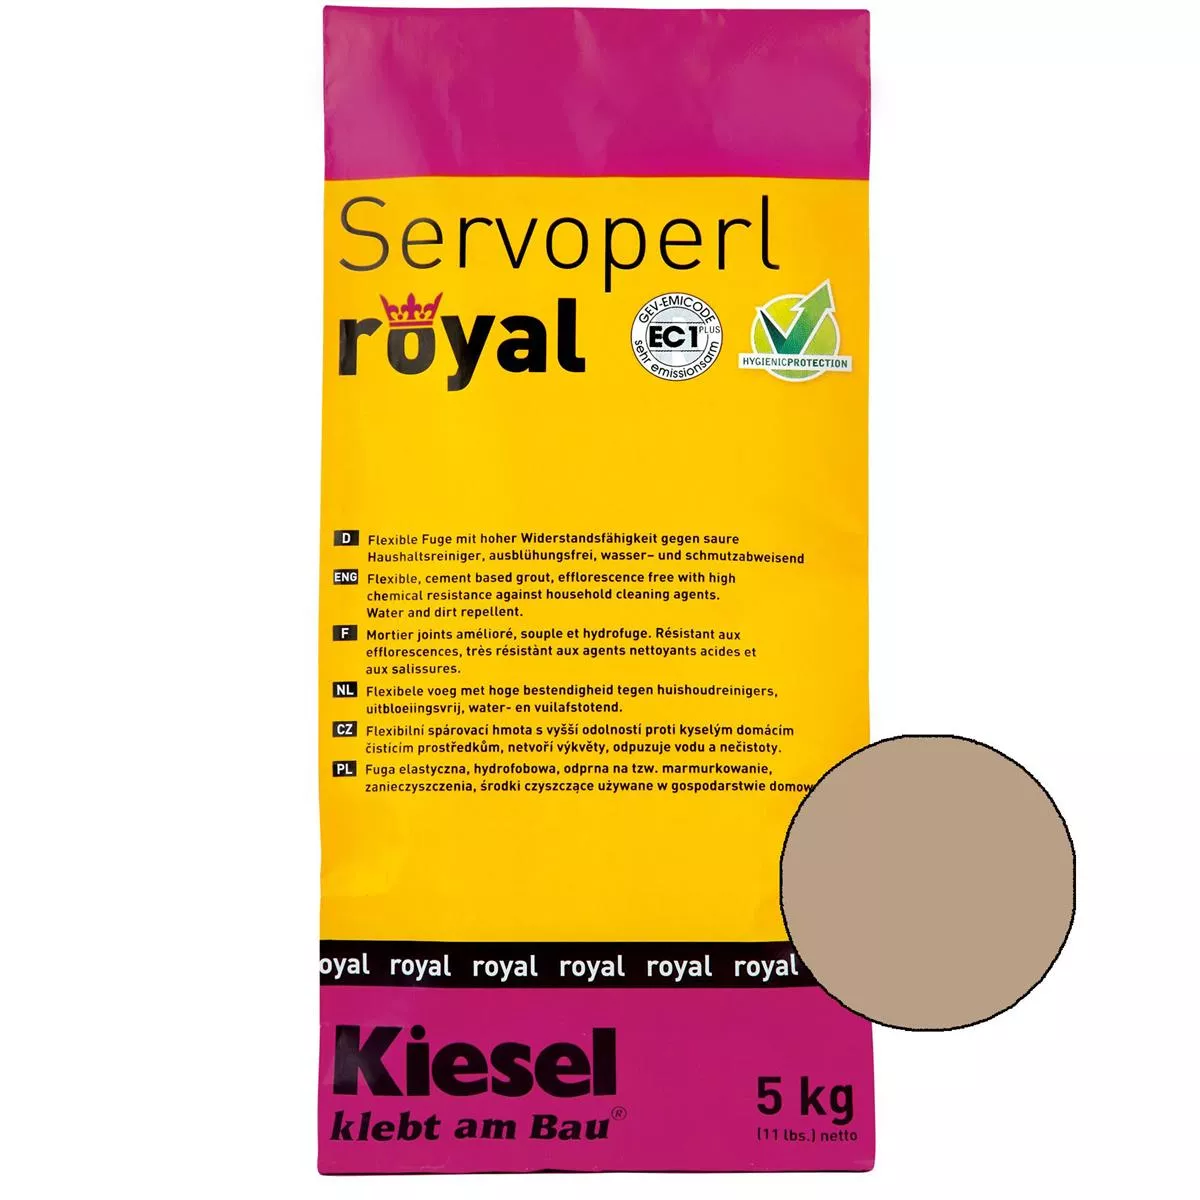 Kiesel Servoperl royal - composto comum - 5 kg de areia do deserto